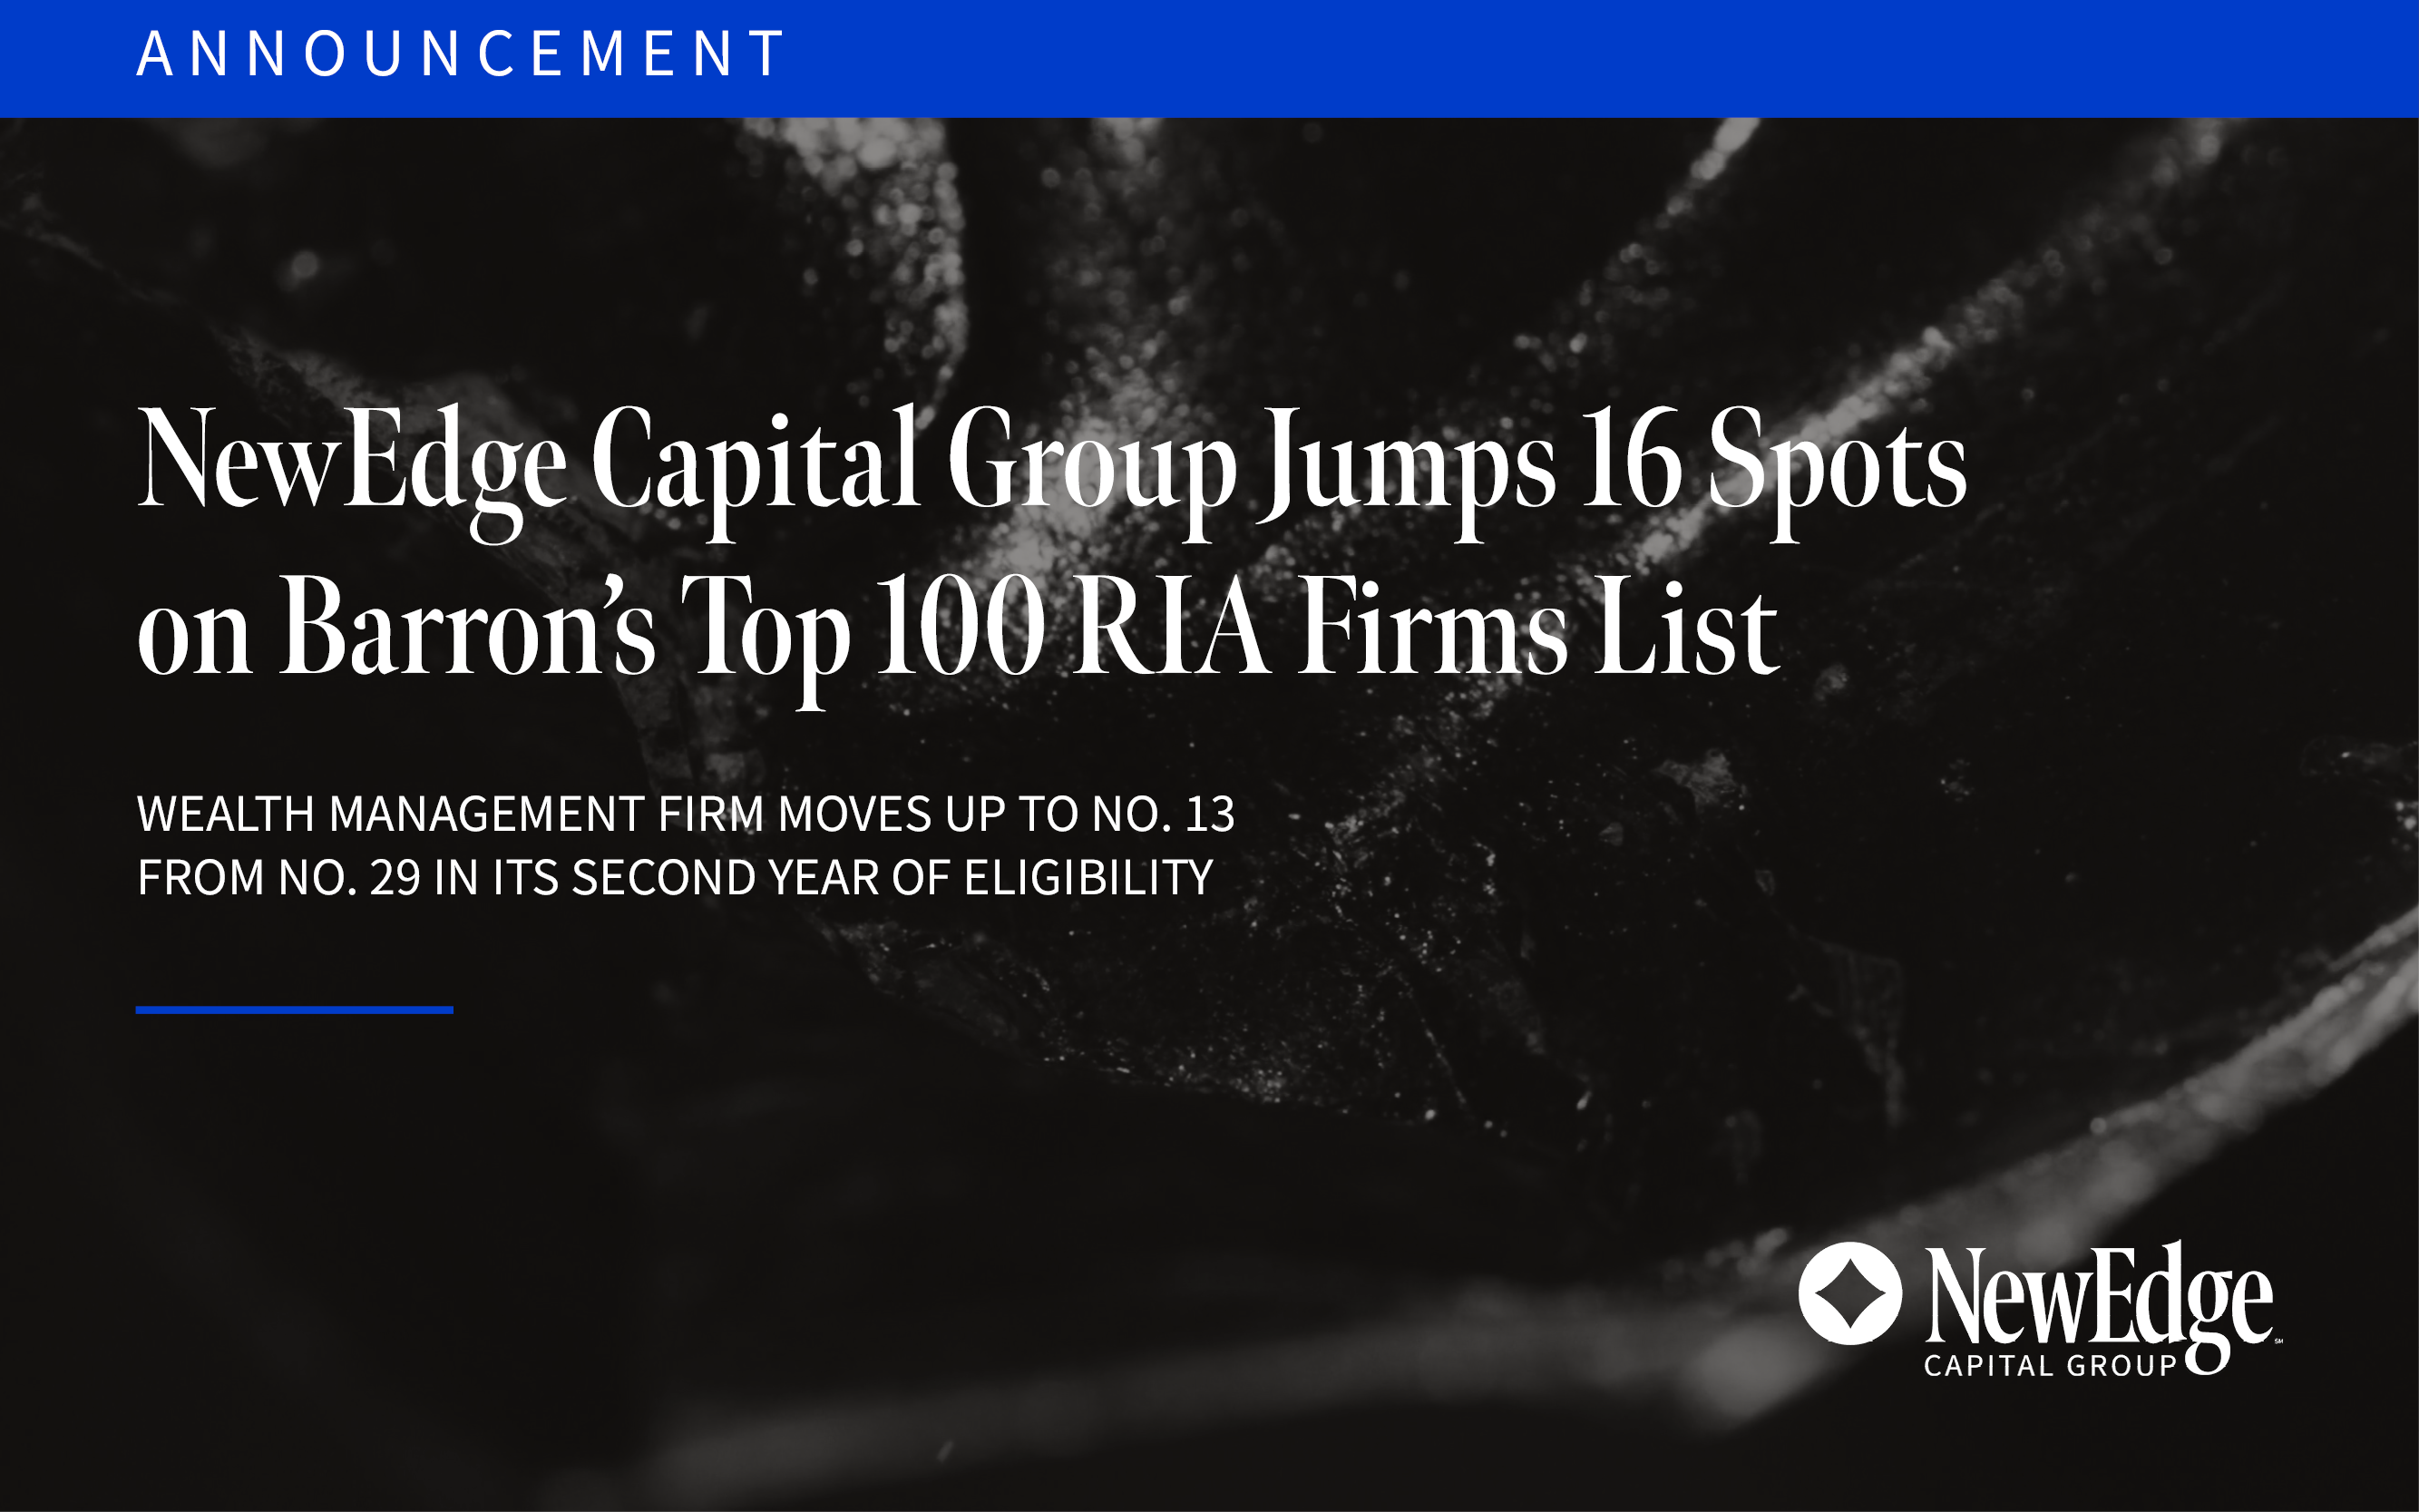 NewEdge Capital Group Jumps 16 Spots on Barron’s Top 100 RIA Firms List